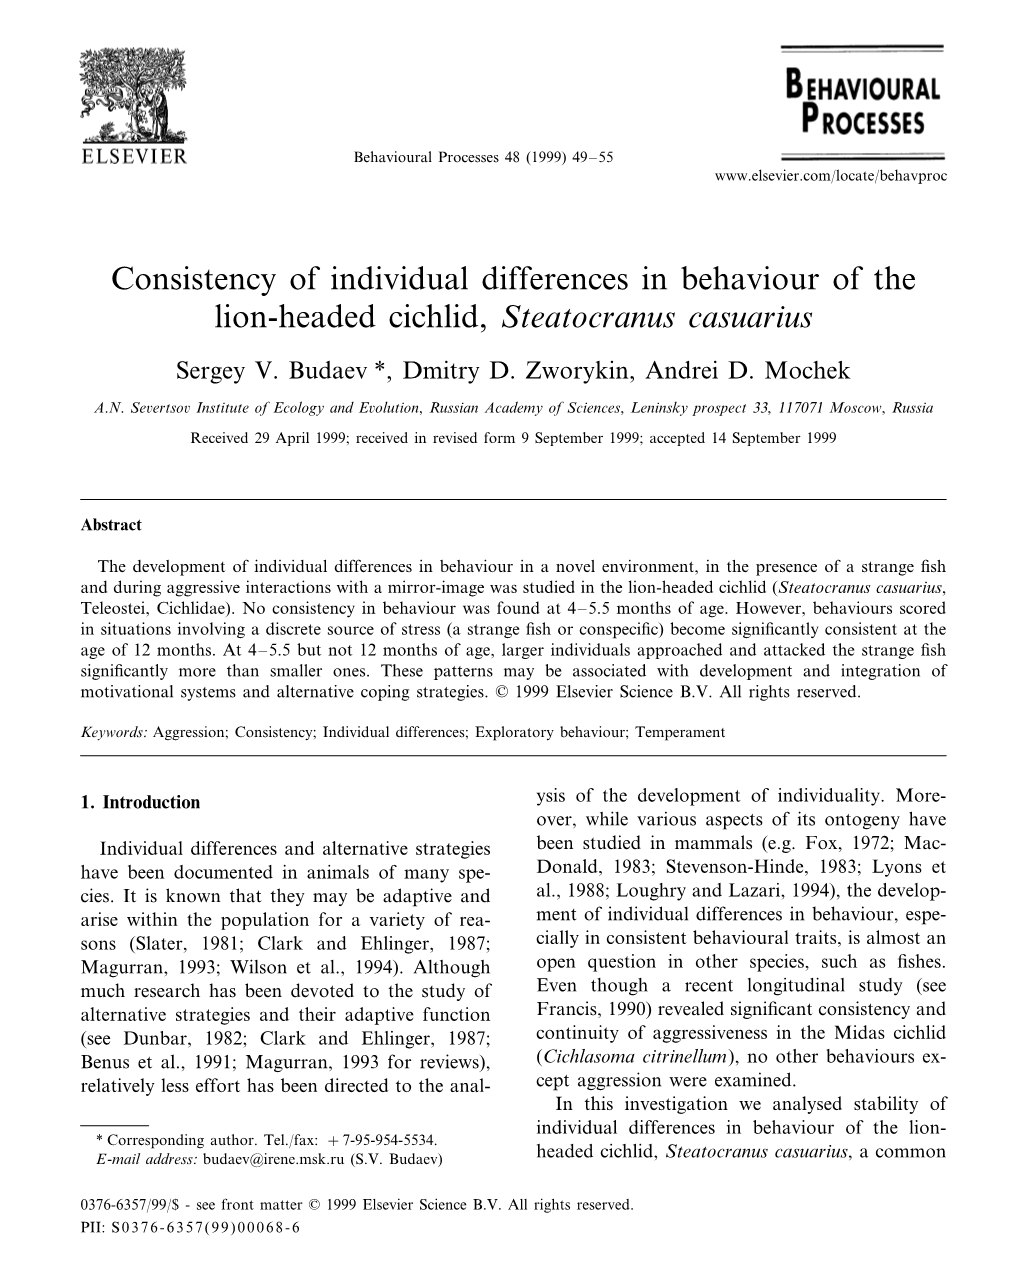 Consistency of Individual Differences in Behaviour of the Lion-Headed Cichlid, Steatocranus Casuarius